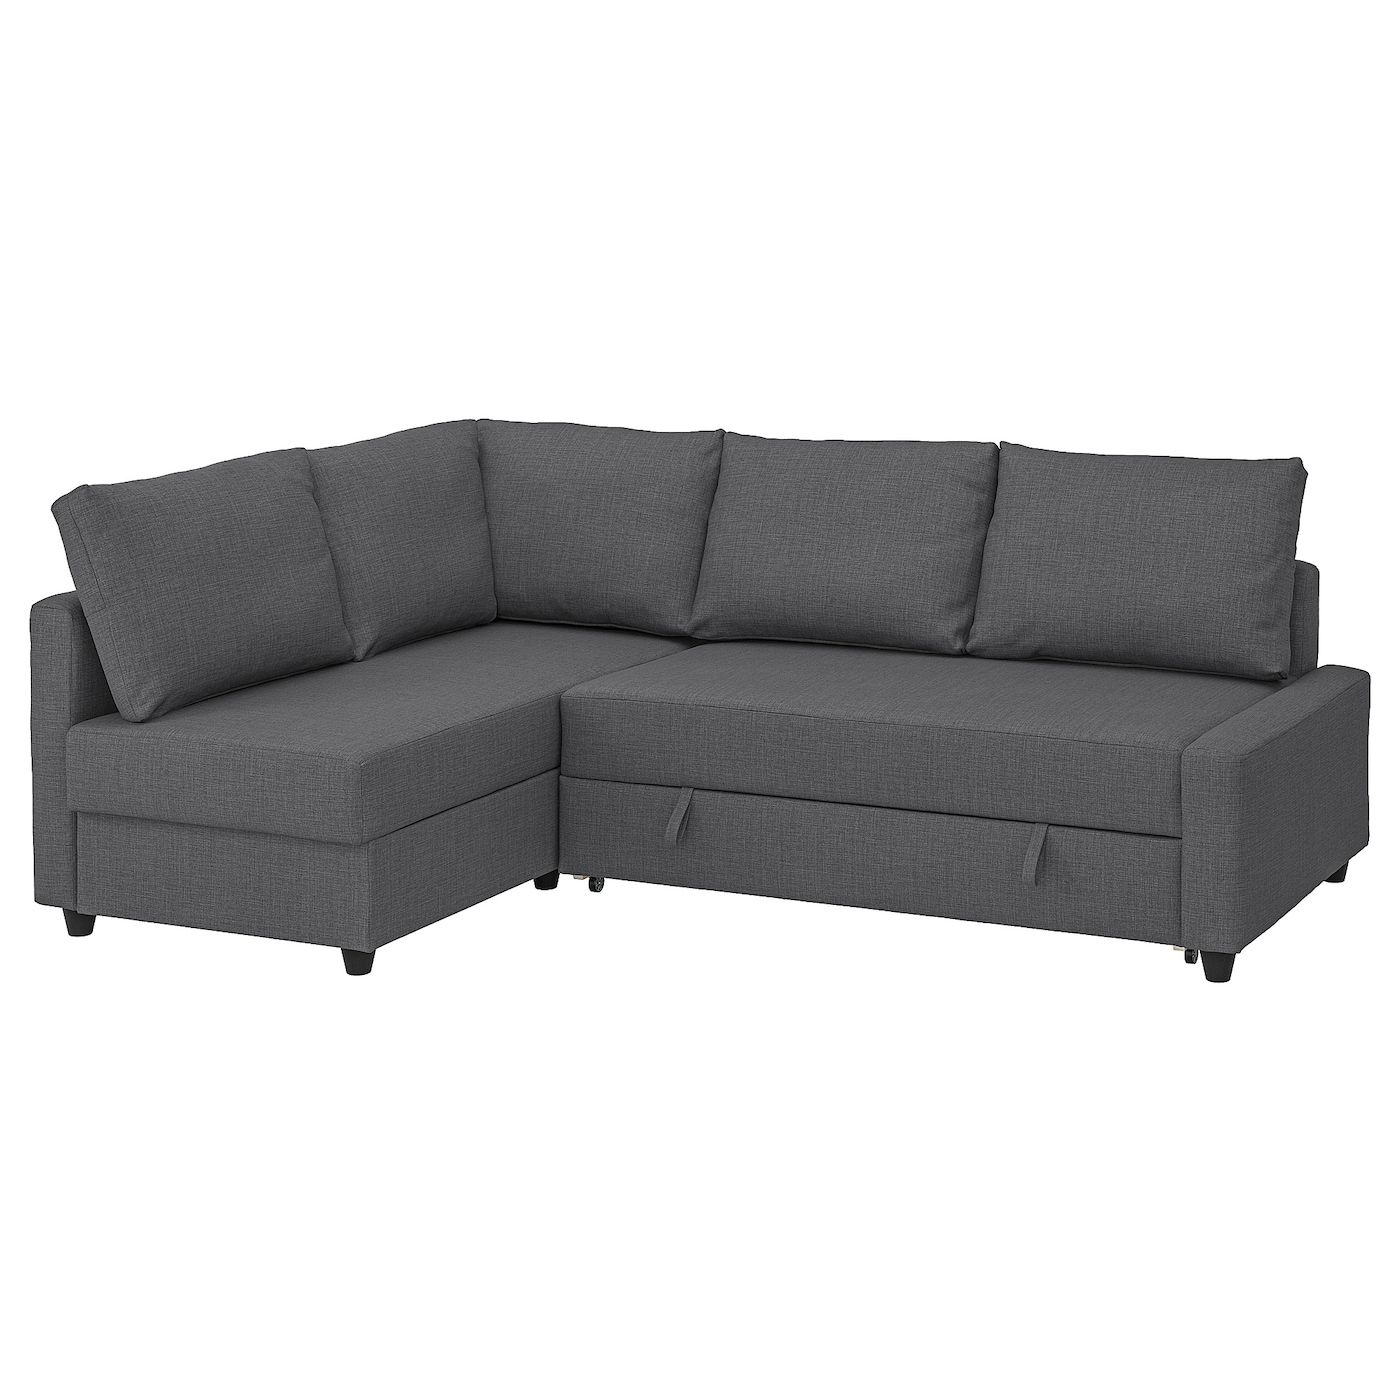 Friheten Corner Sofa Bed With Storage – With Extra Back In Ikea Corner Sofas With Storage (View 11 of 15)